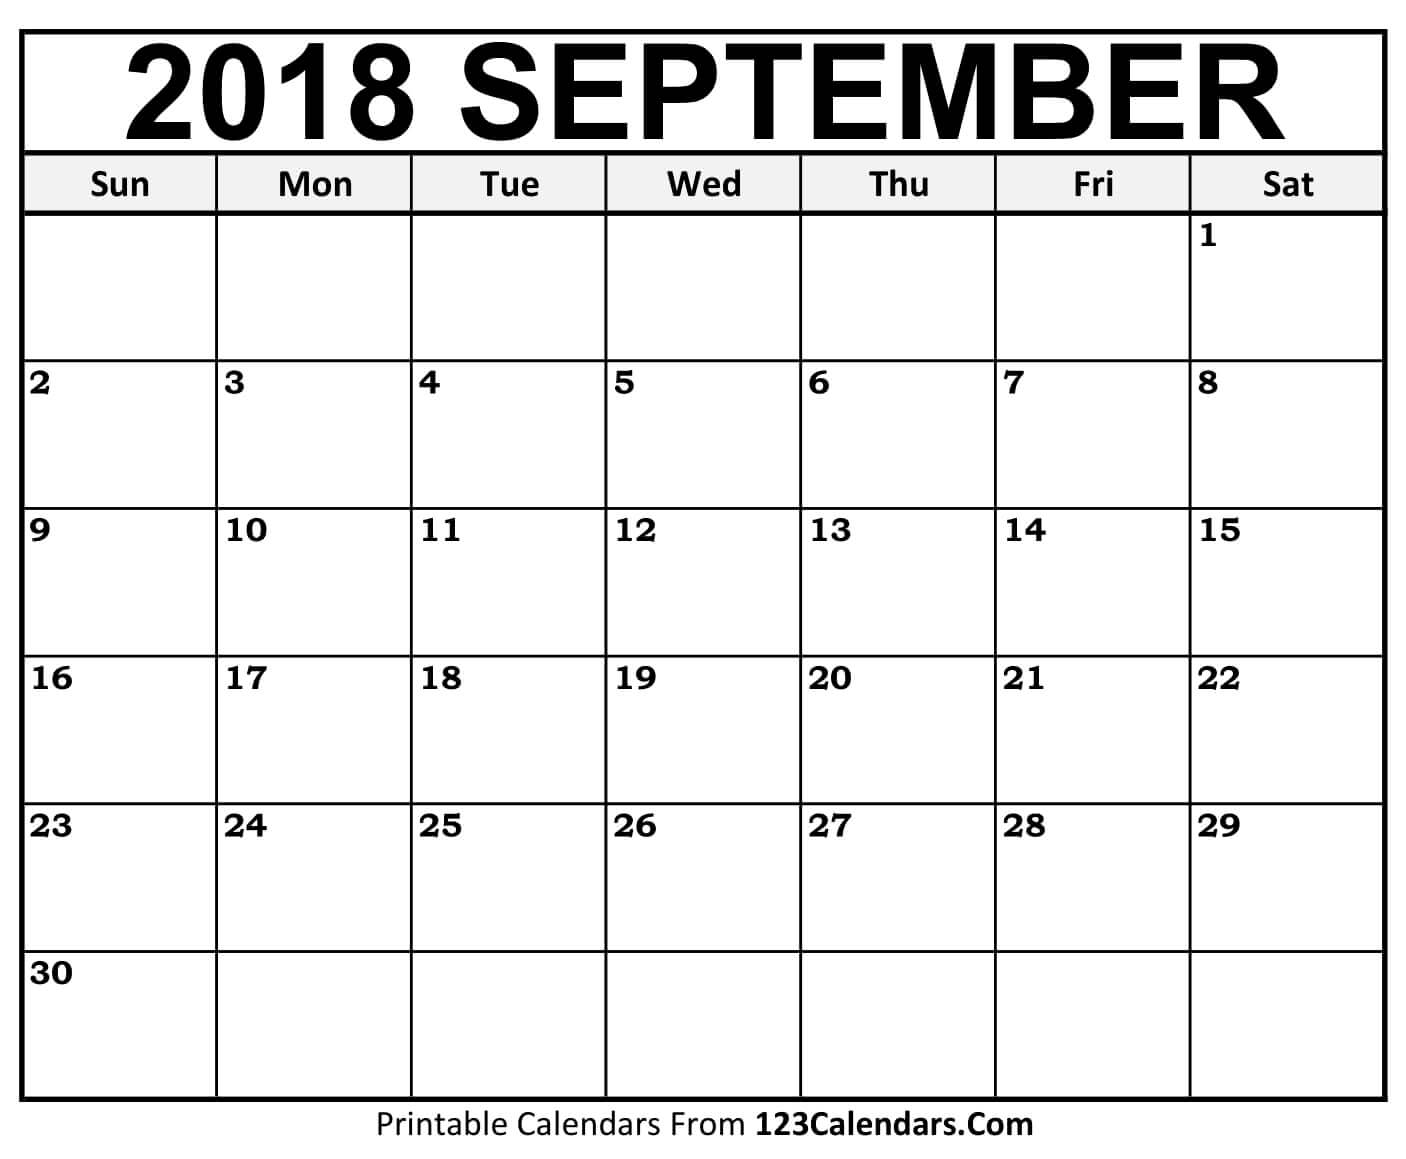 30 декабрь 2018. Календарь ноябрь 2021. Календарь октябрь. Календарь октябрь 2022. Календарь сентябрь октябрь 2022.